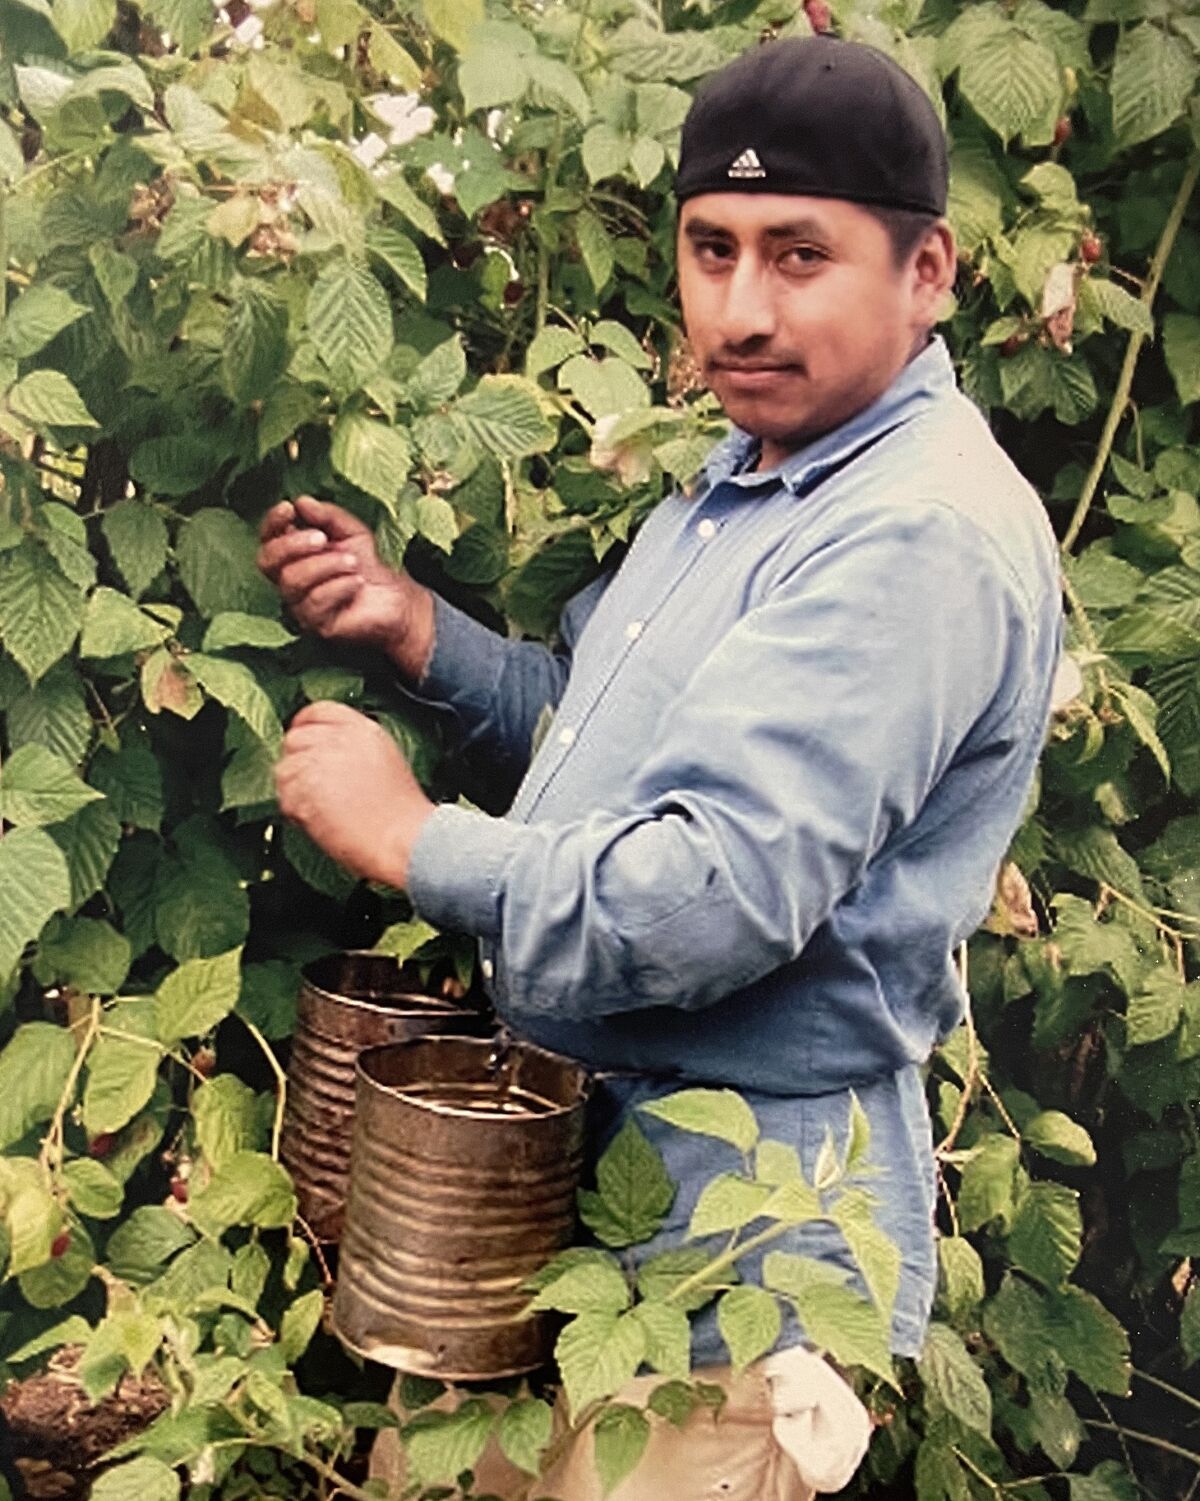 Jaime Villegas picks berries on a farm